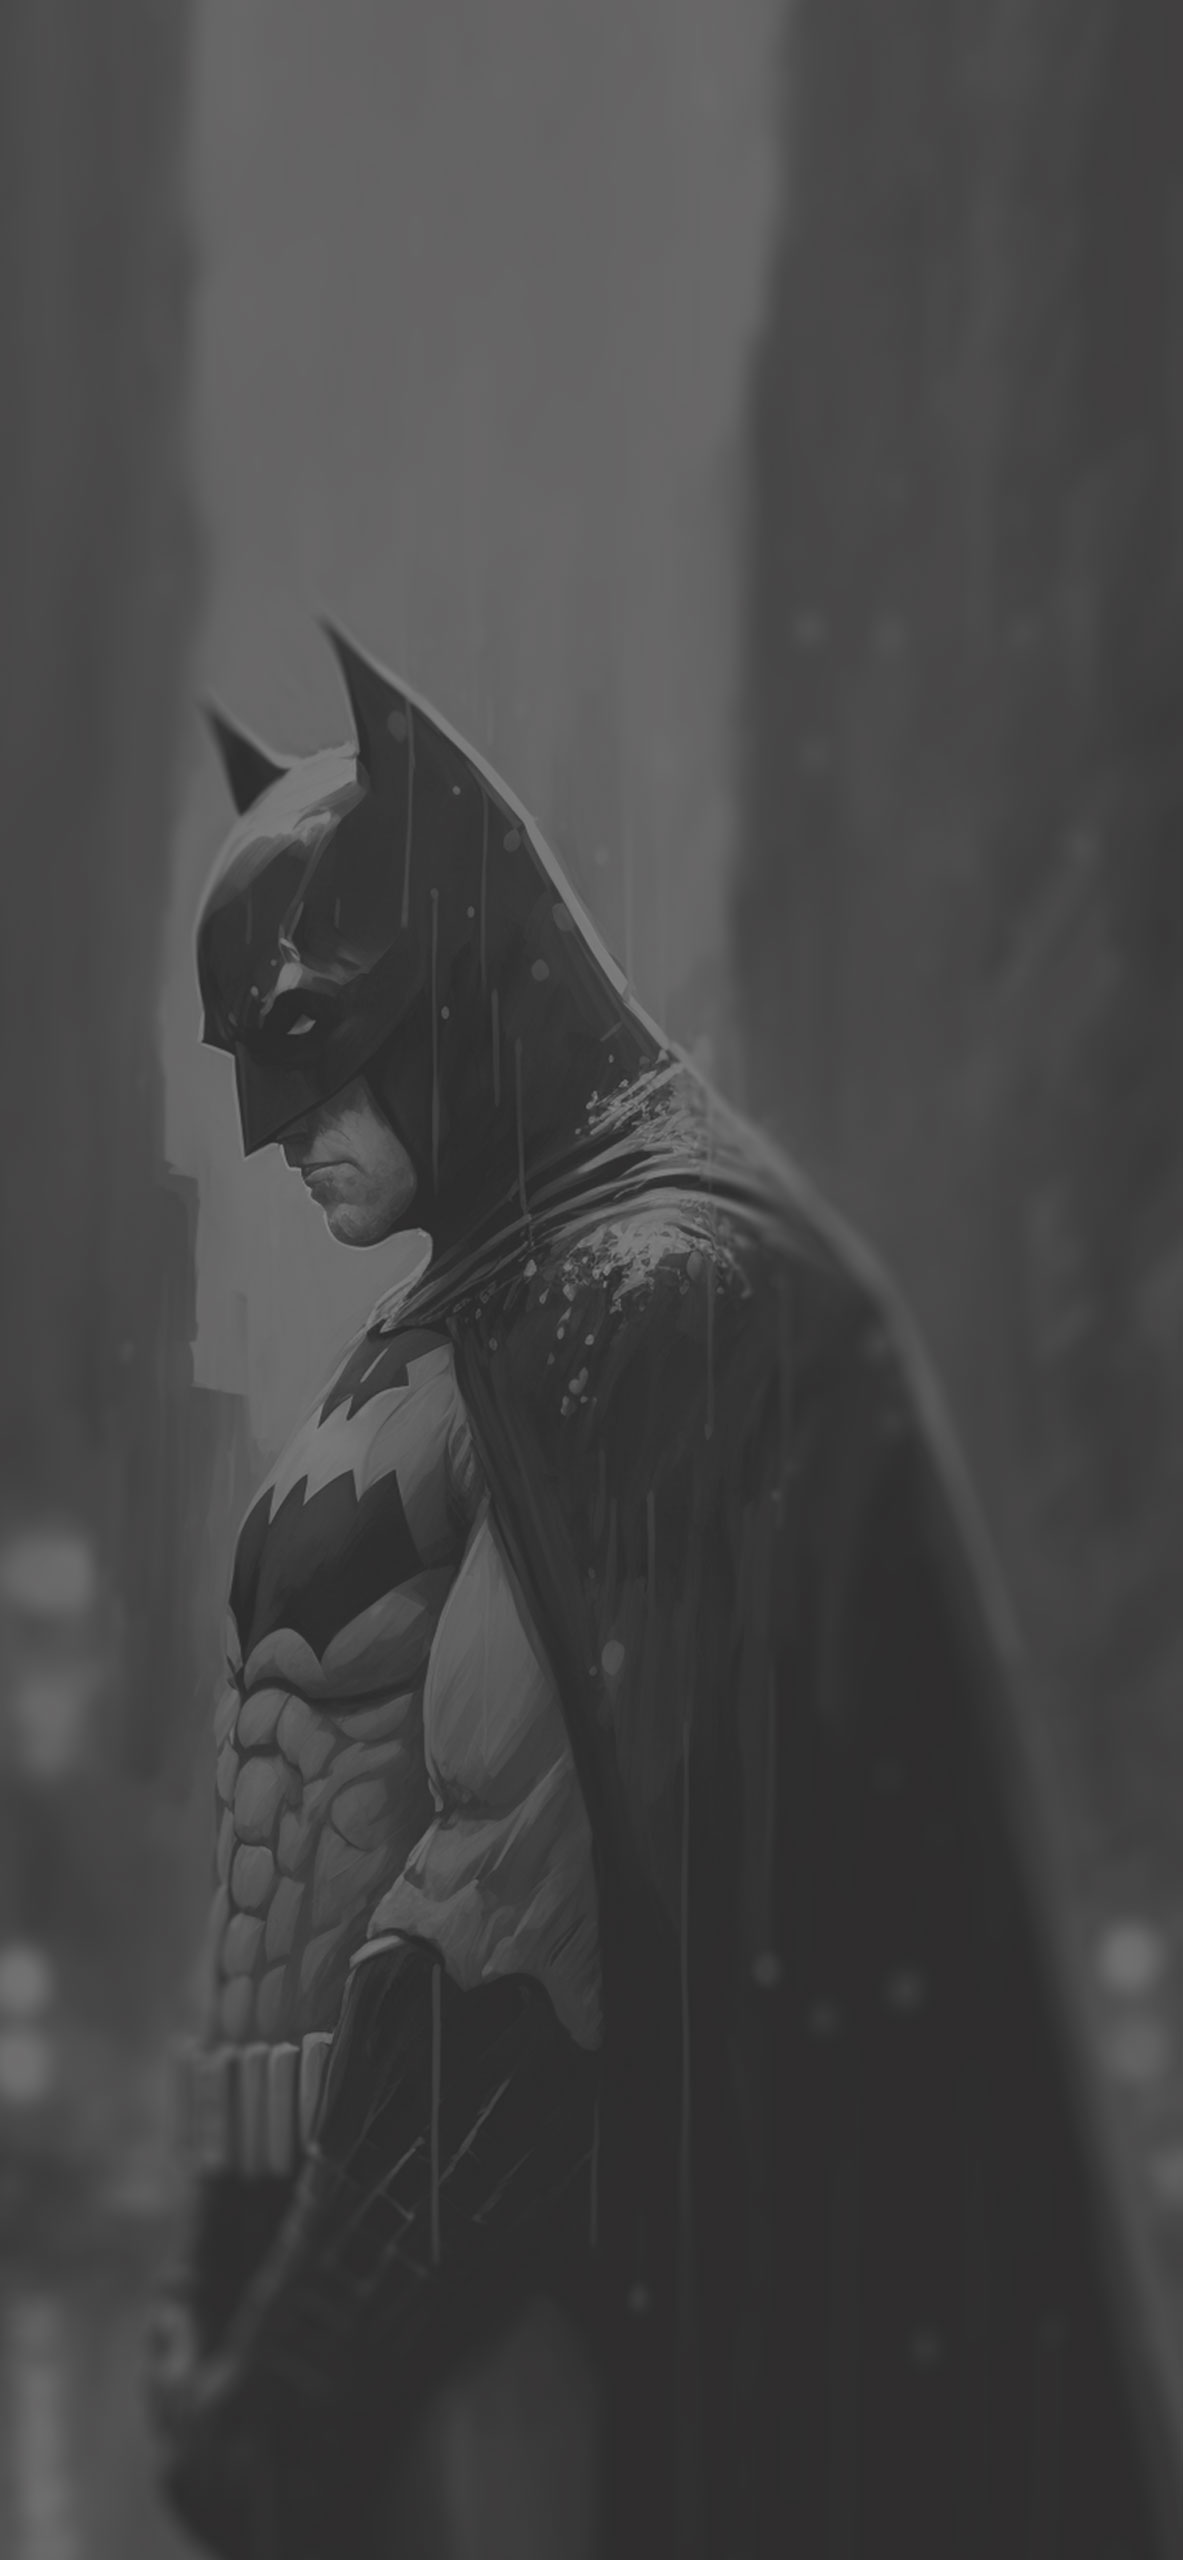 Batman in the Rain Wallpapers - Batman Wallpapers for iPhone